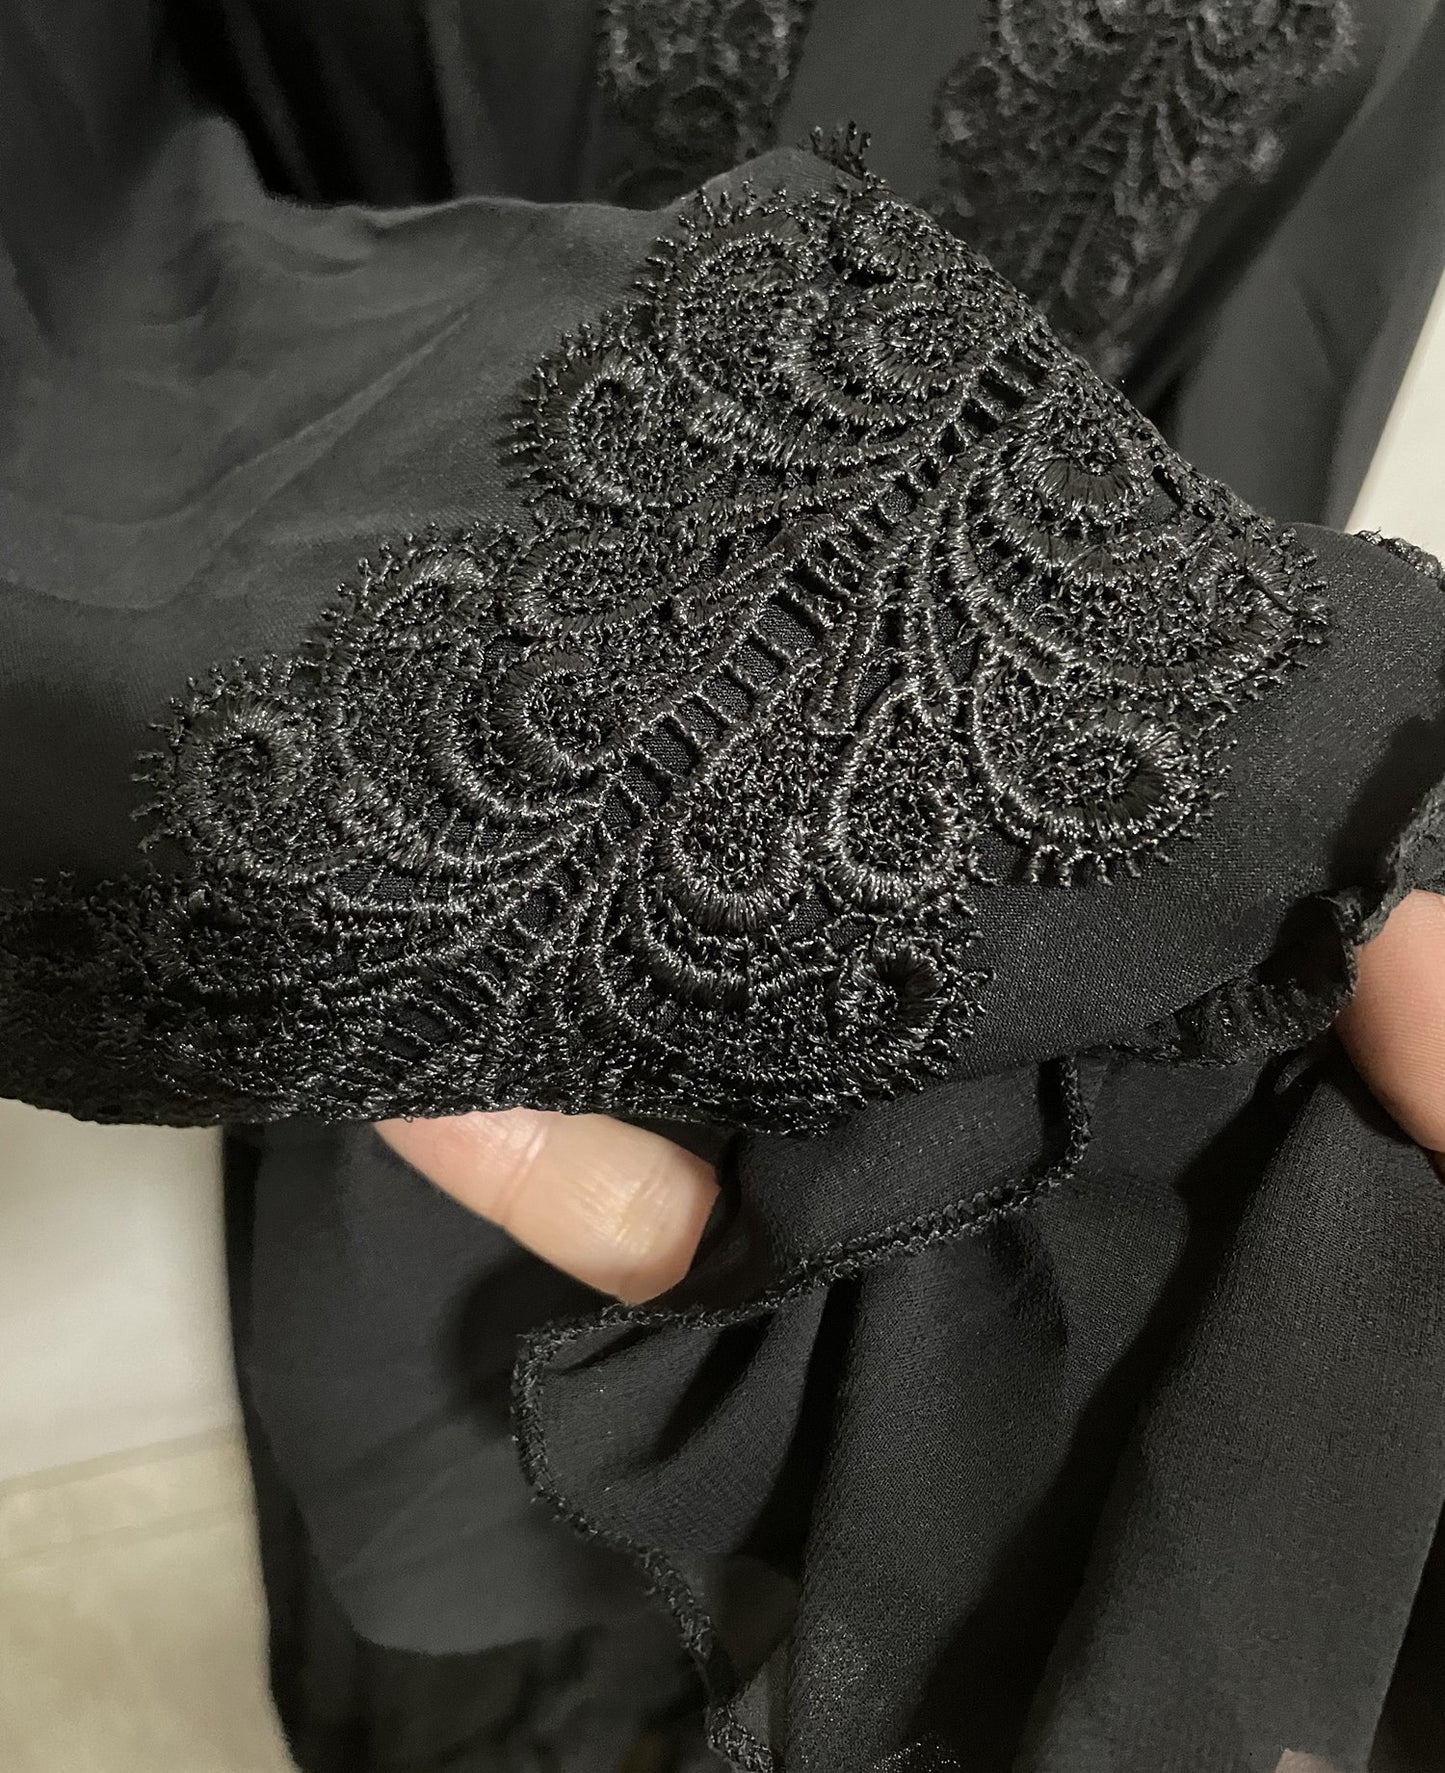 Abaya Ouverte - Noir